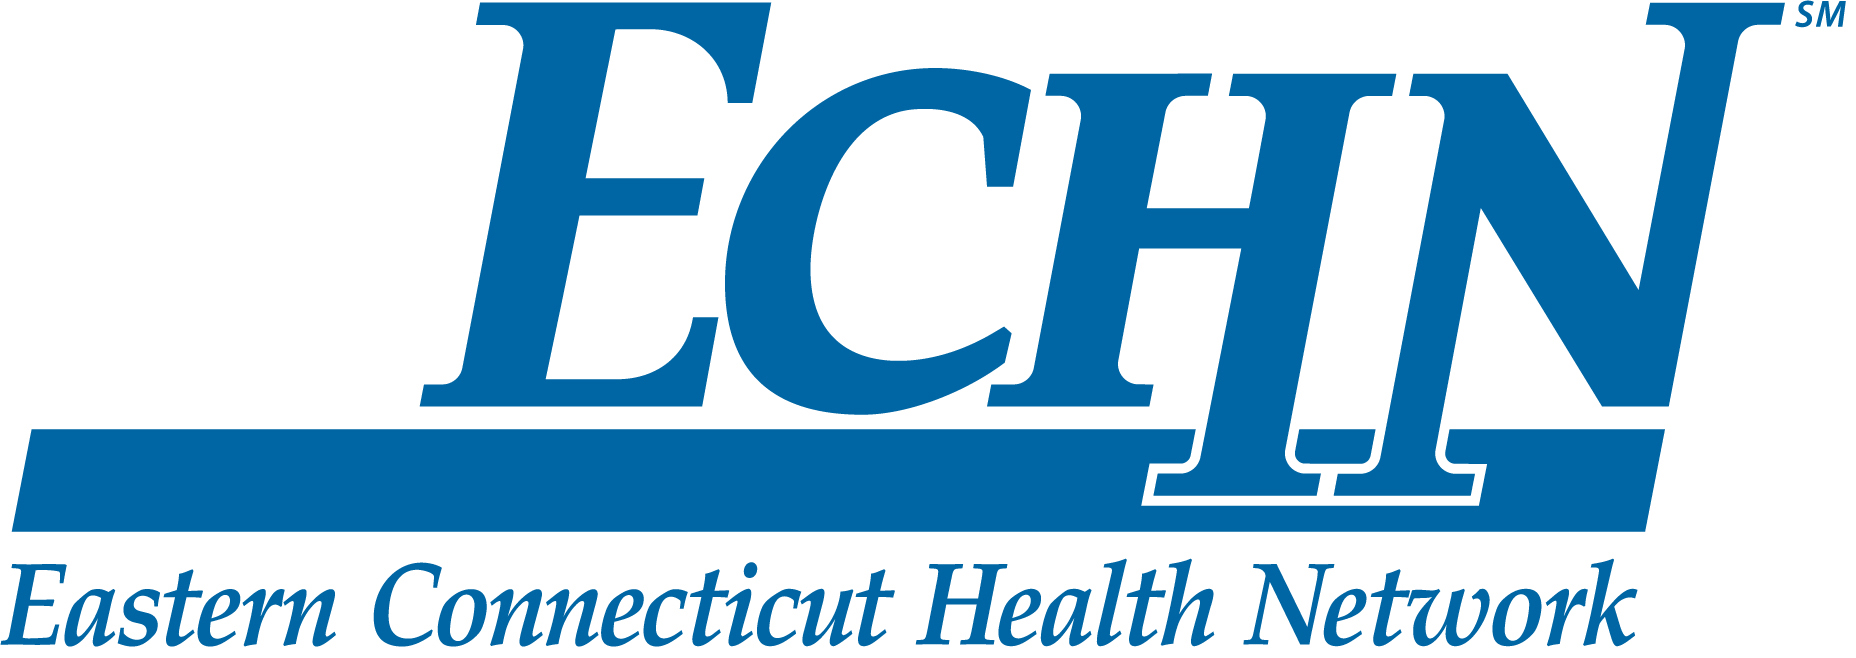 ECHN Logo.jpg